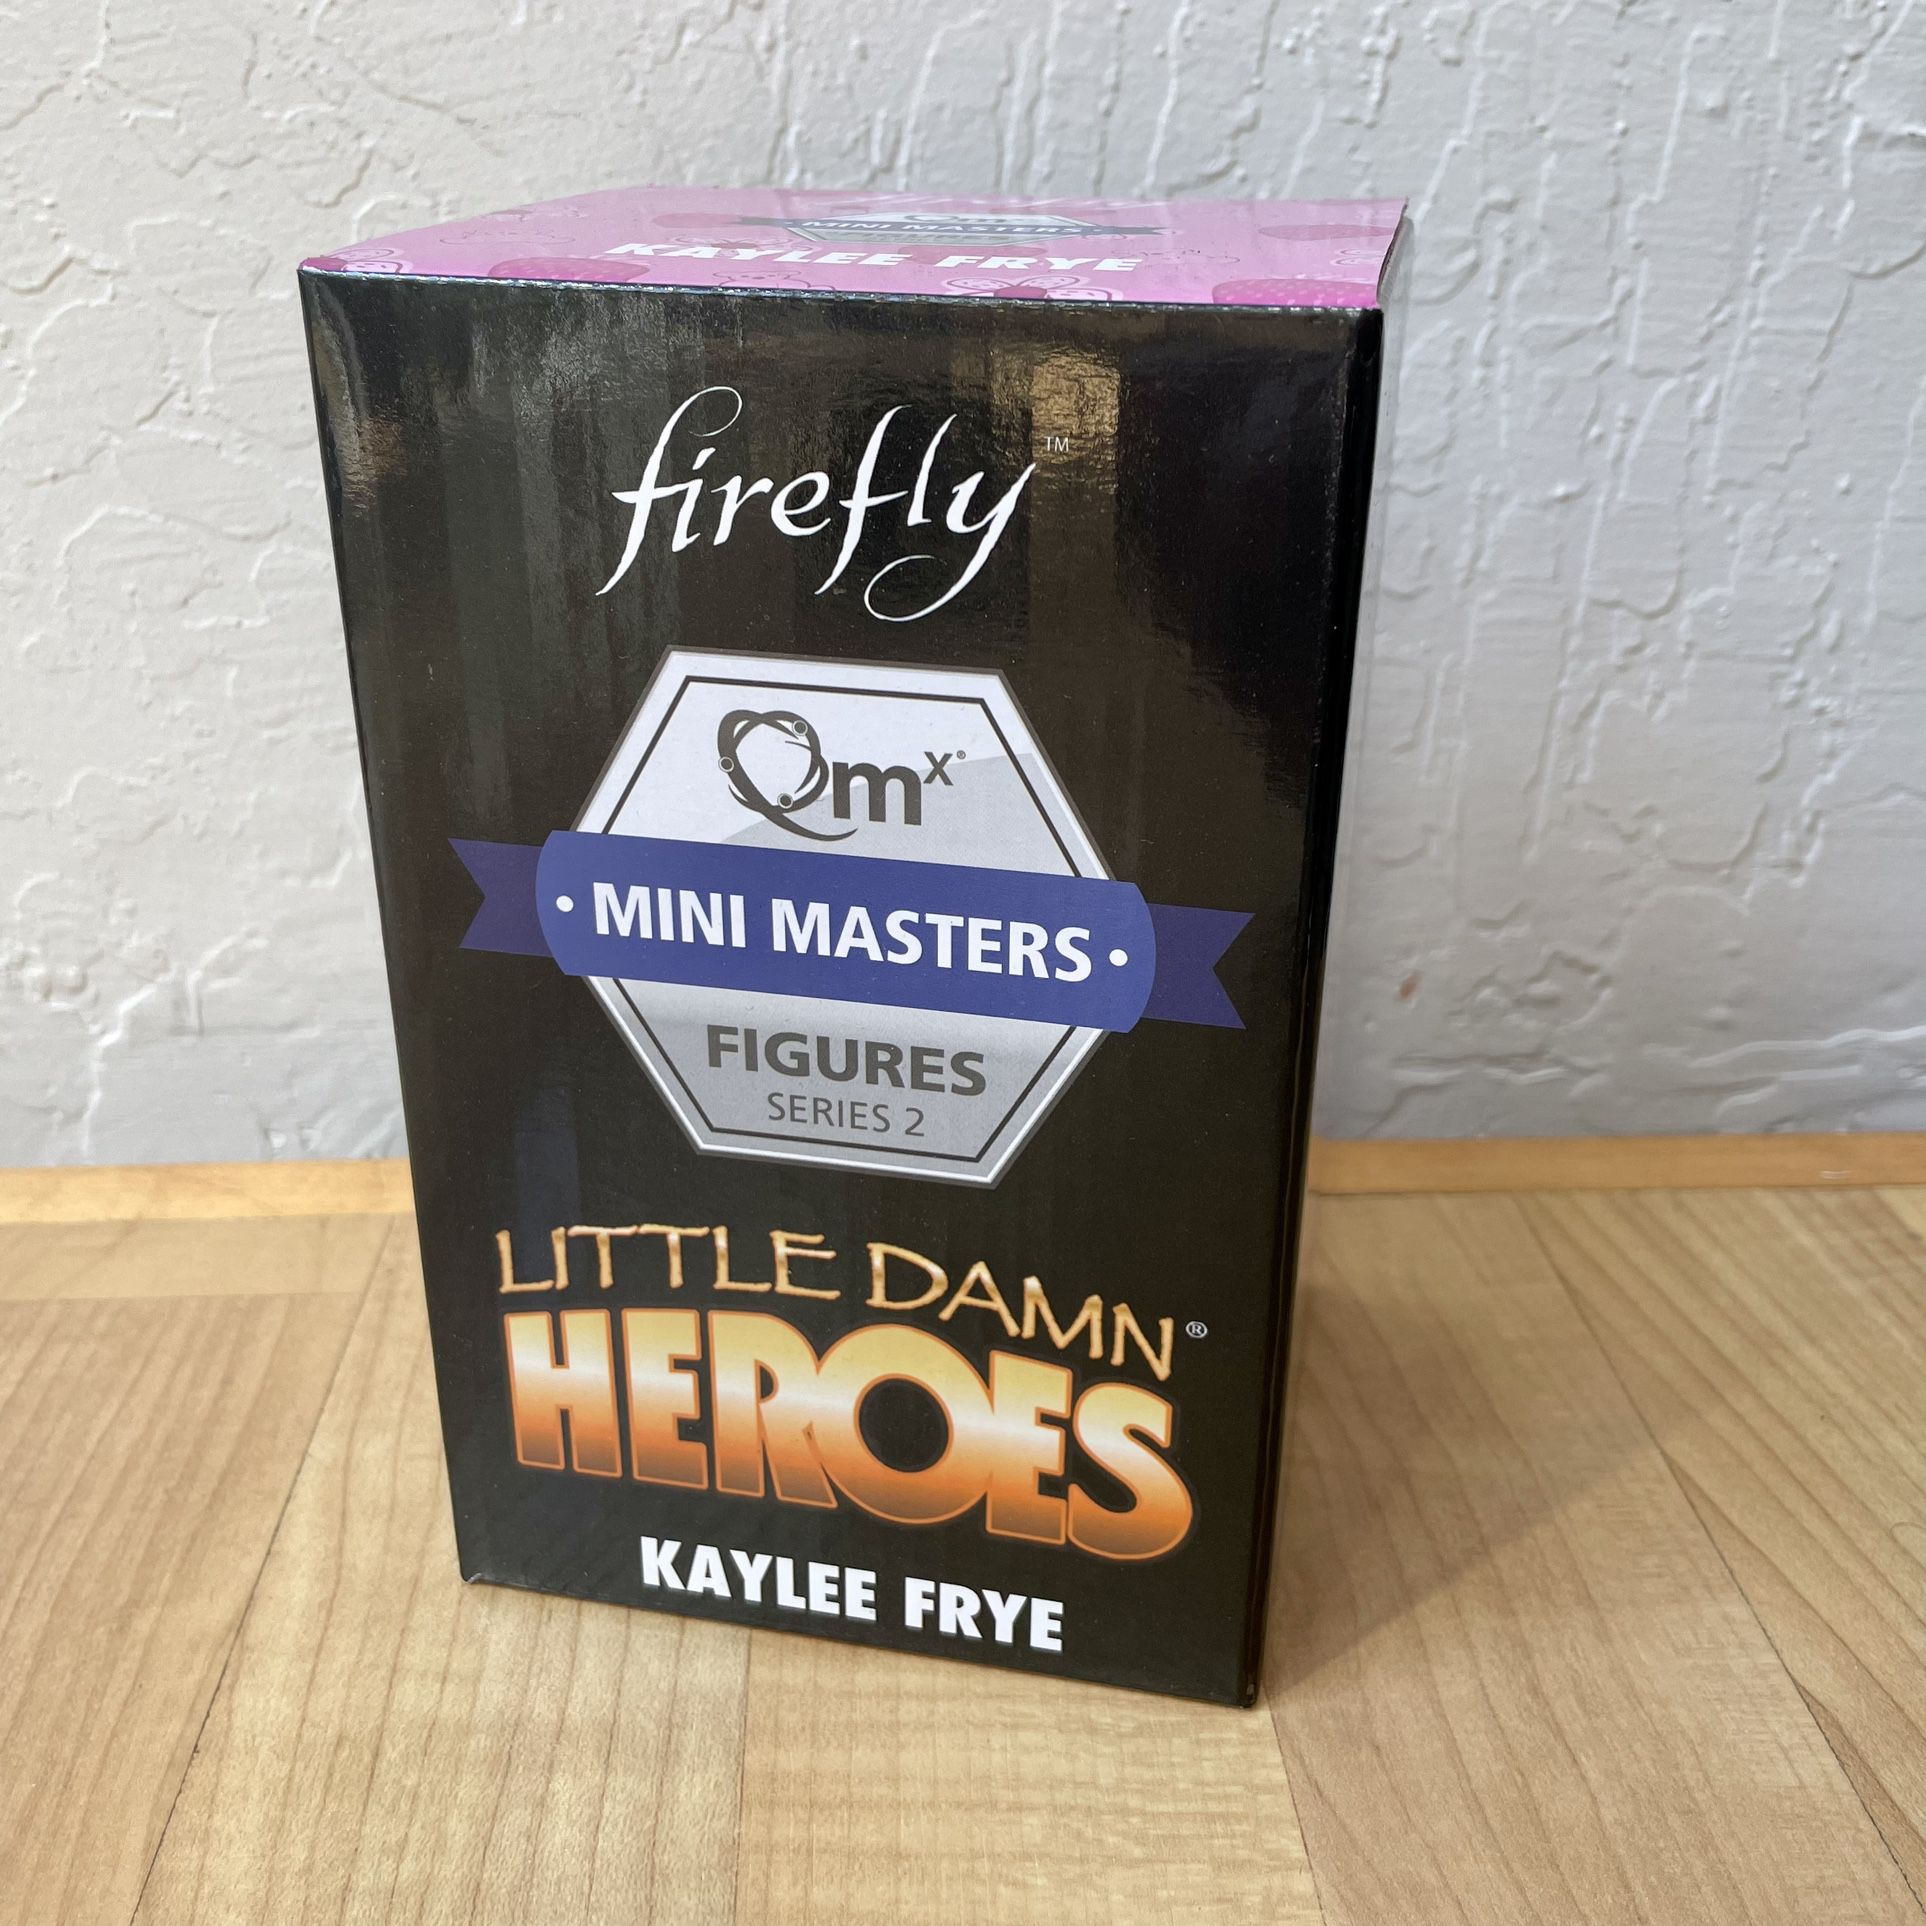 Firefly Qm Mini Masters Figures Series 2 Little Damn Heroes Kaylee Frye